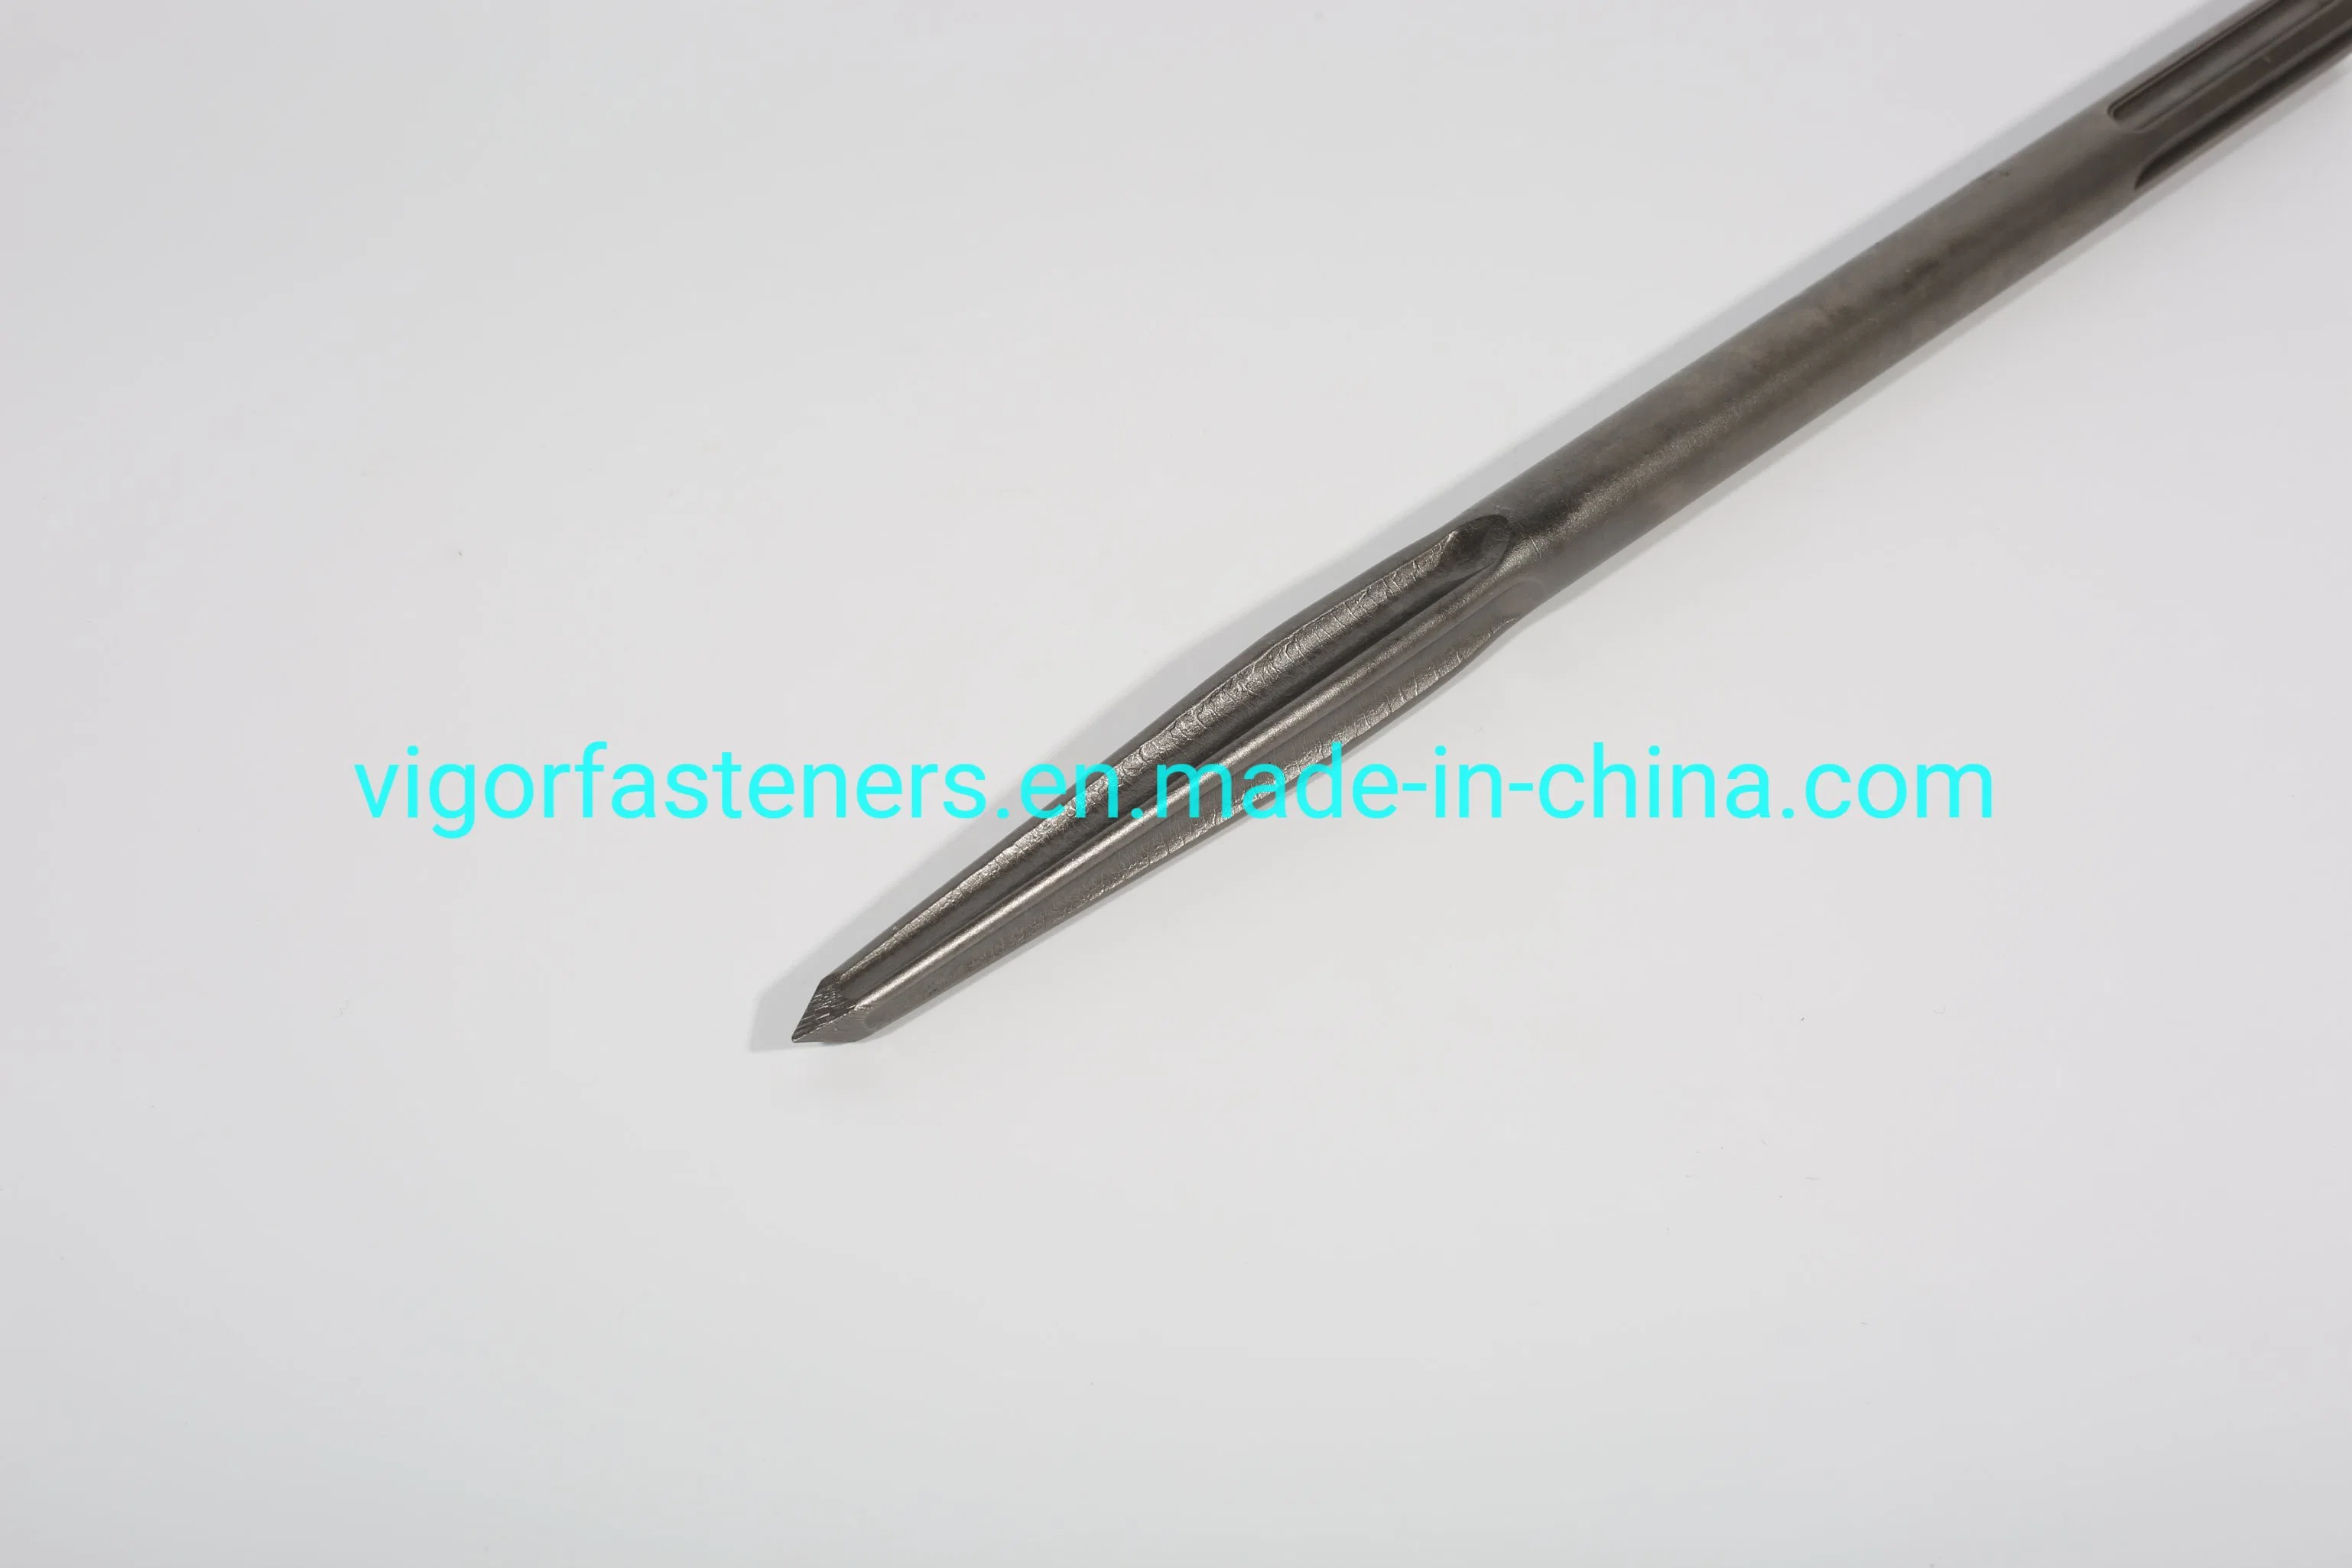 12PCS Professional Chrome Vanadium Combination Pin Center Cone Cylinder Punch Flat Chisel Set in Plastic Box